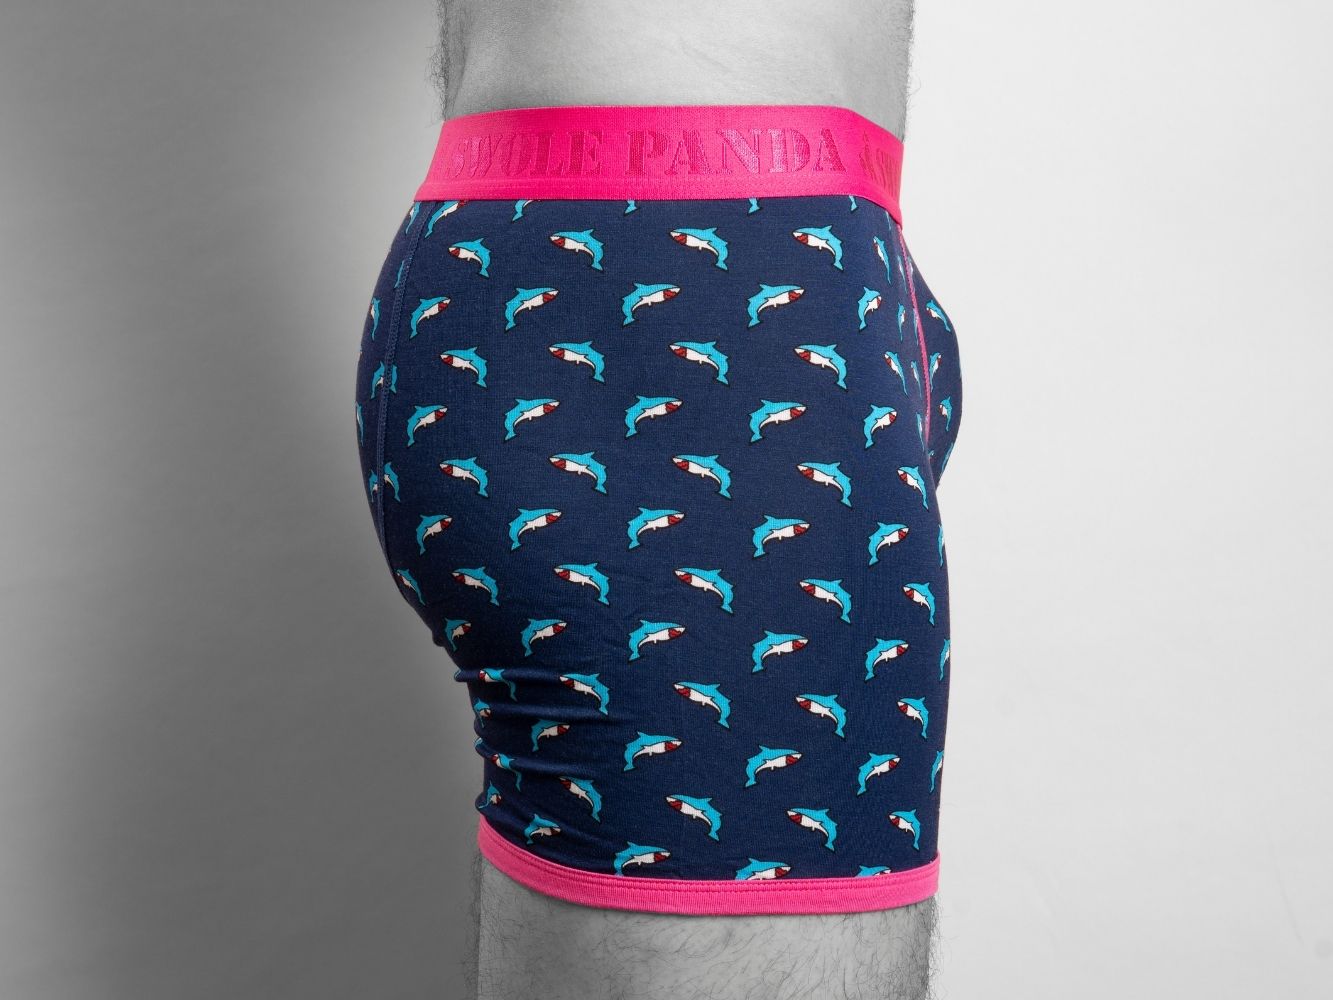 underwear-bamboo-boxers-sharks-2_efd42592-1b55-481c-8dc0-3a077d67d4be.jpg